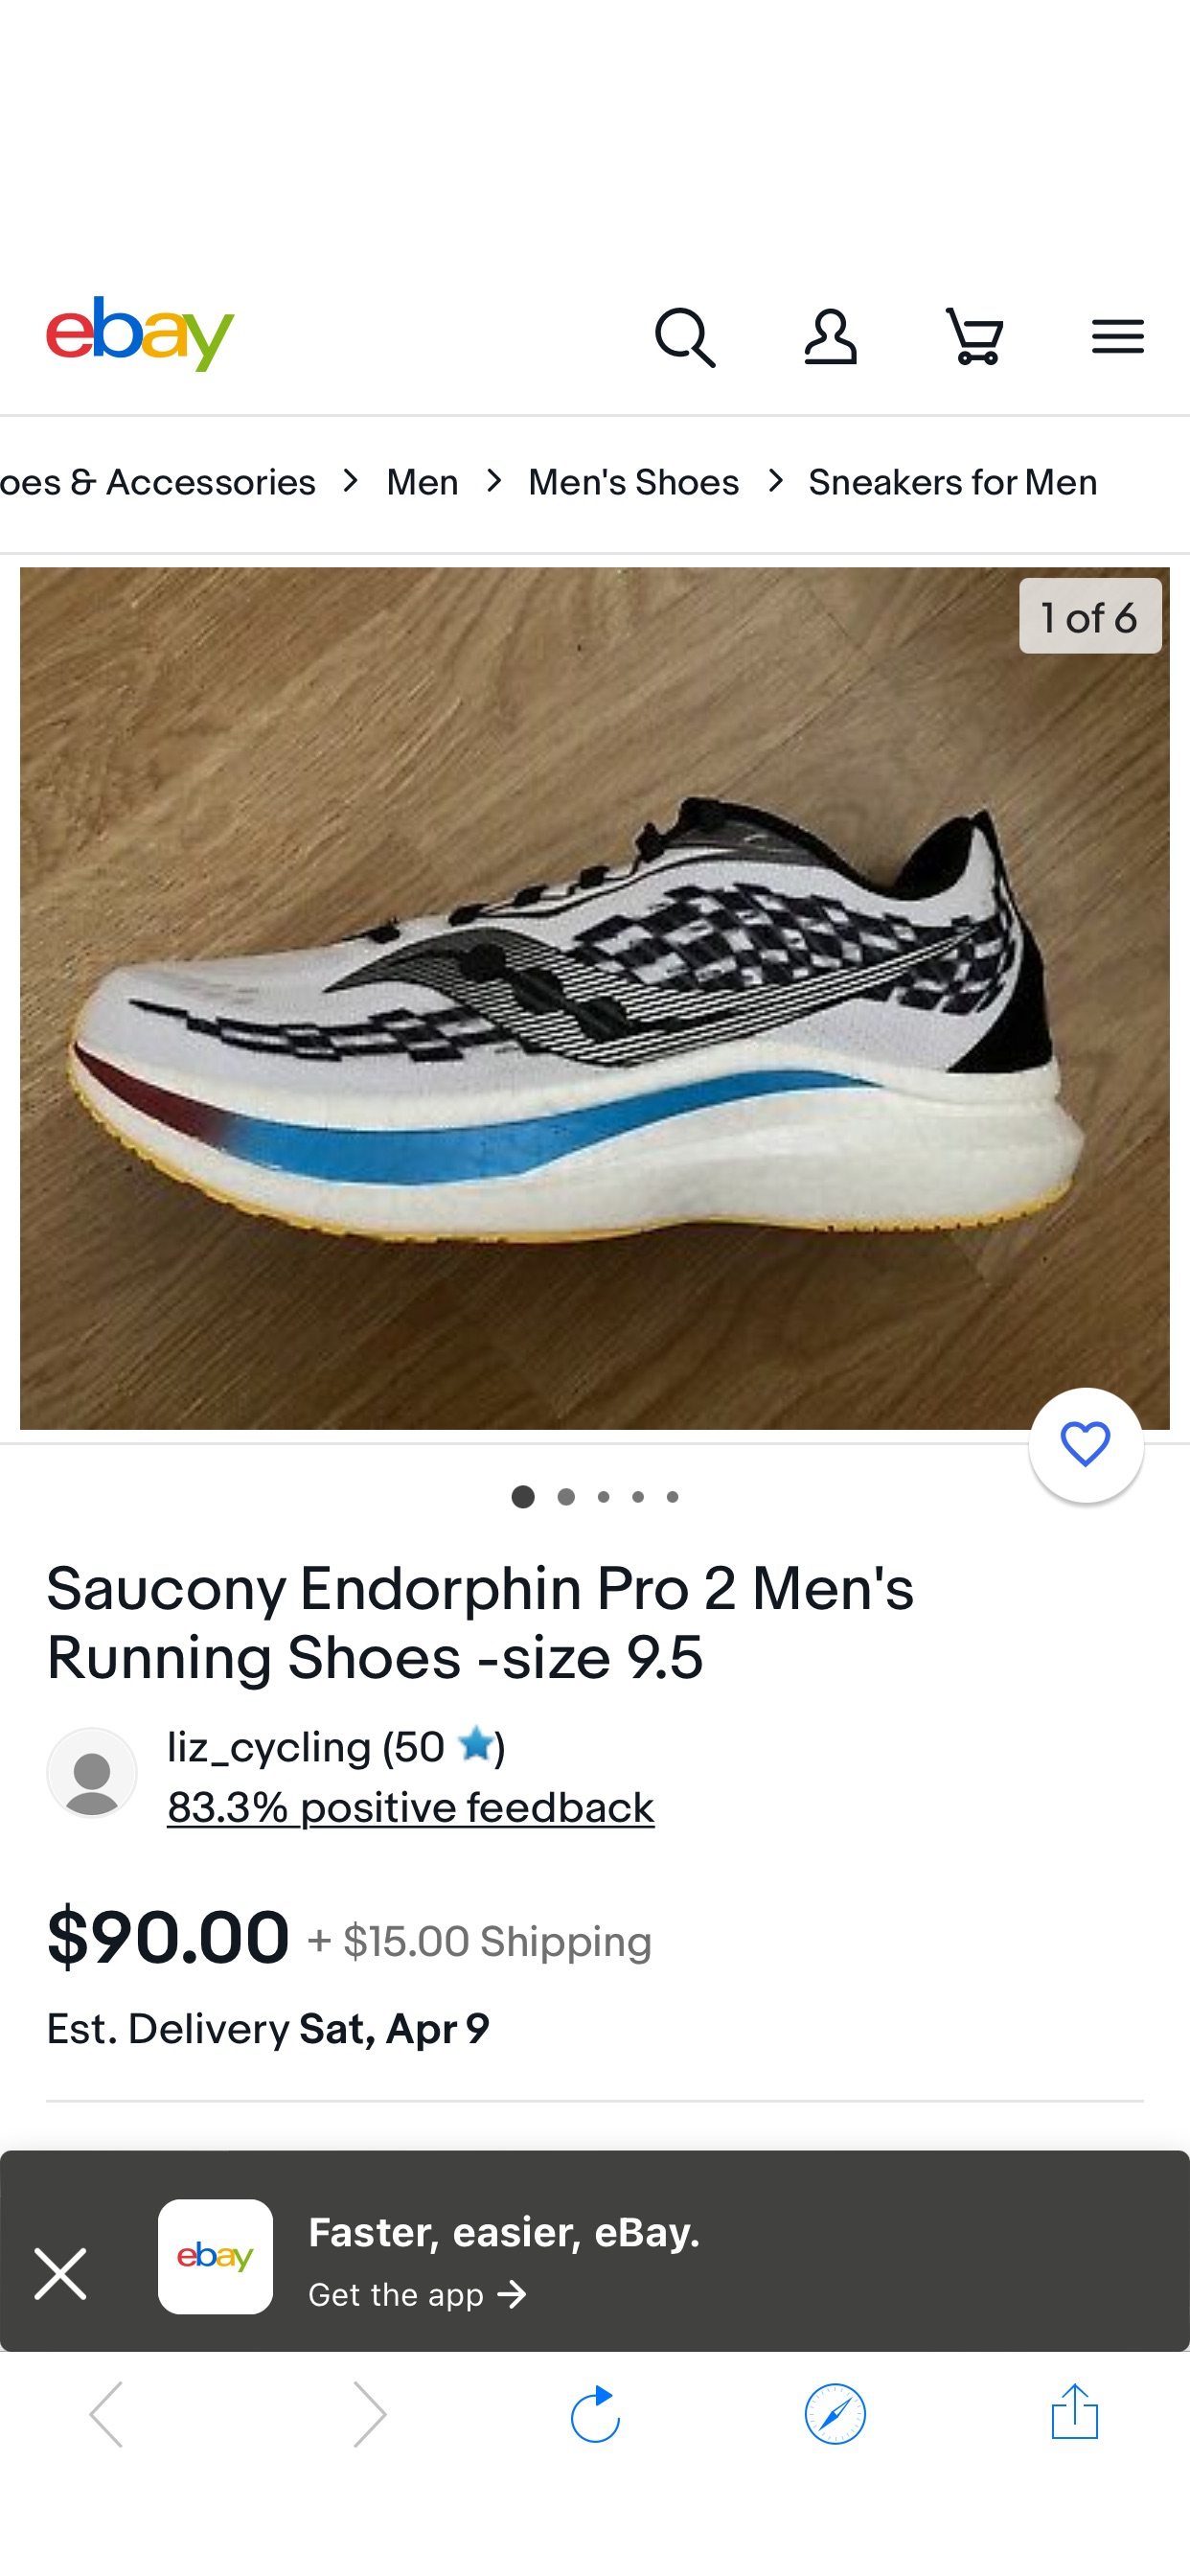 Saucony Endorphin Pro 2 Men's Running Shoes -size 9.5 | eBay 男士经典碳板跑鞋